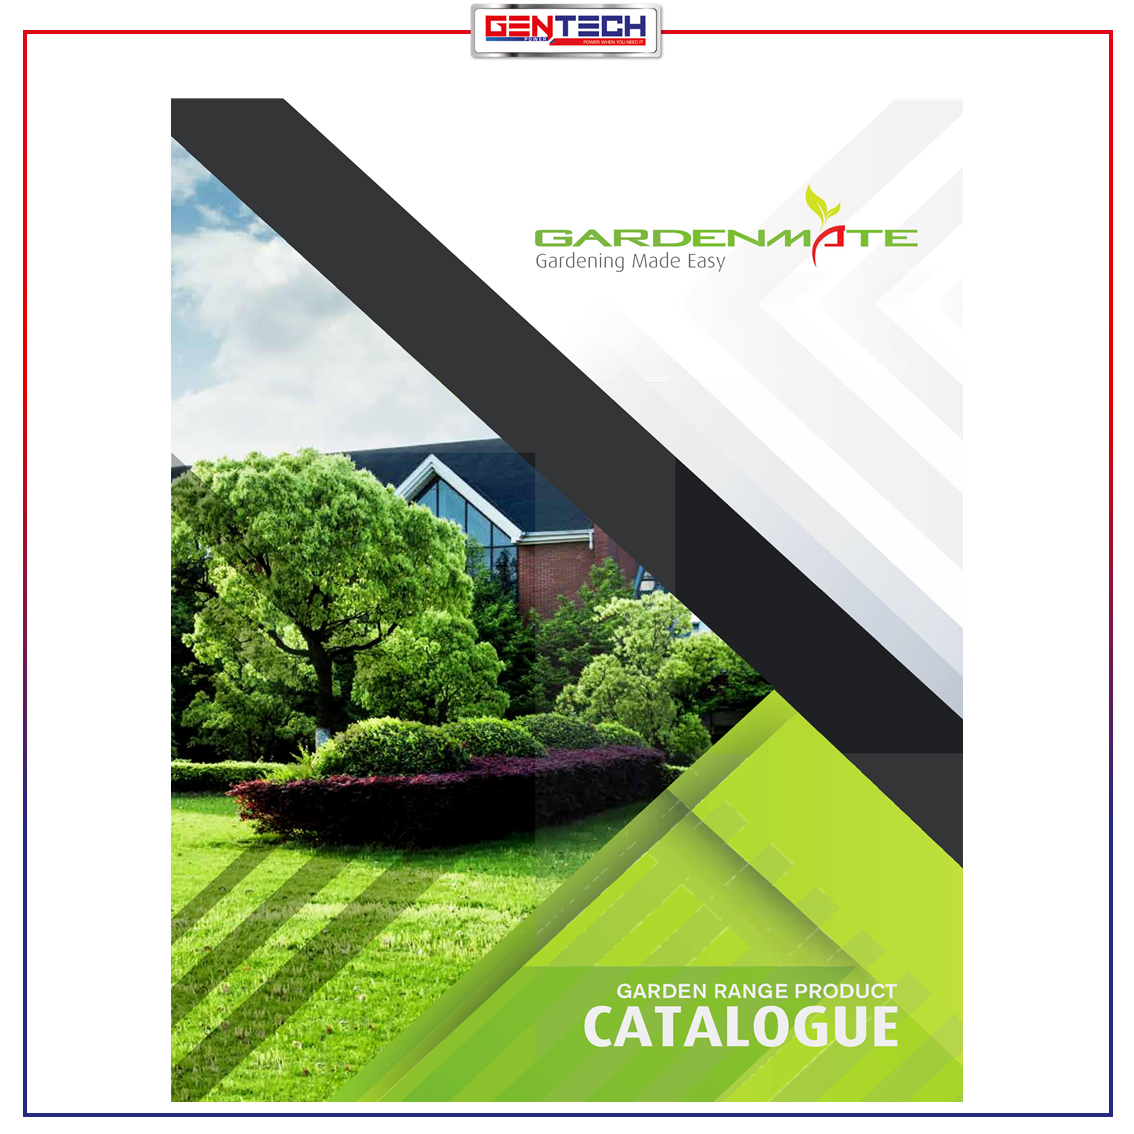 GENTECH - Gardenmate Catalogue Catalogue